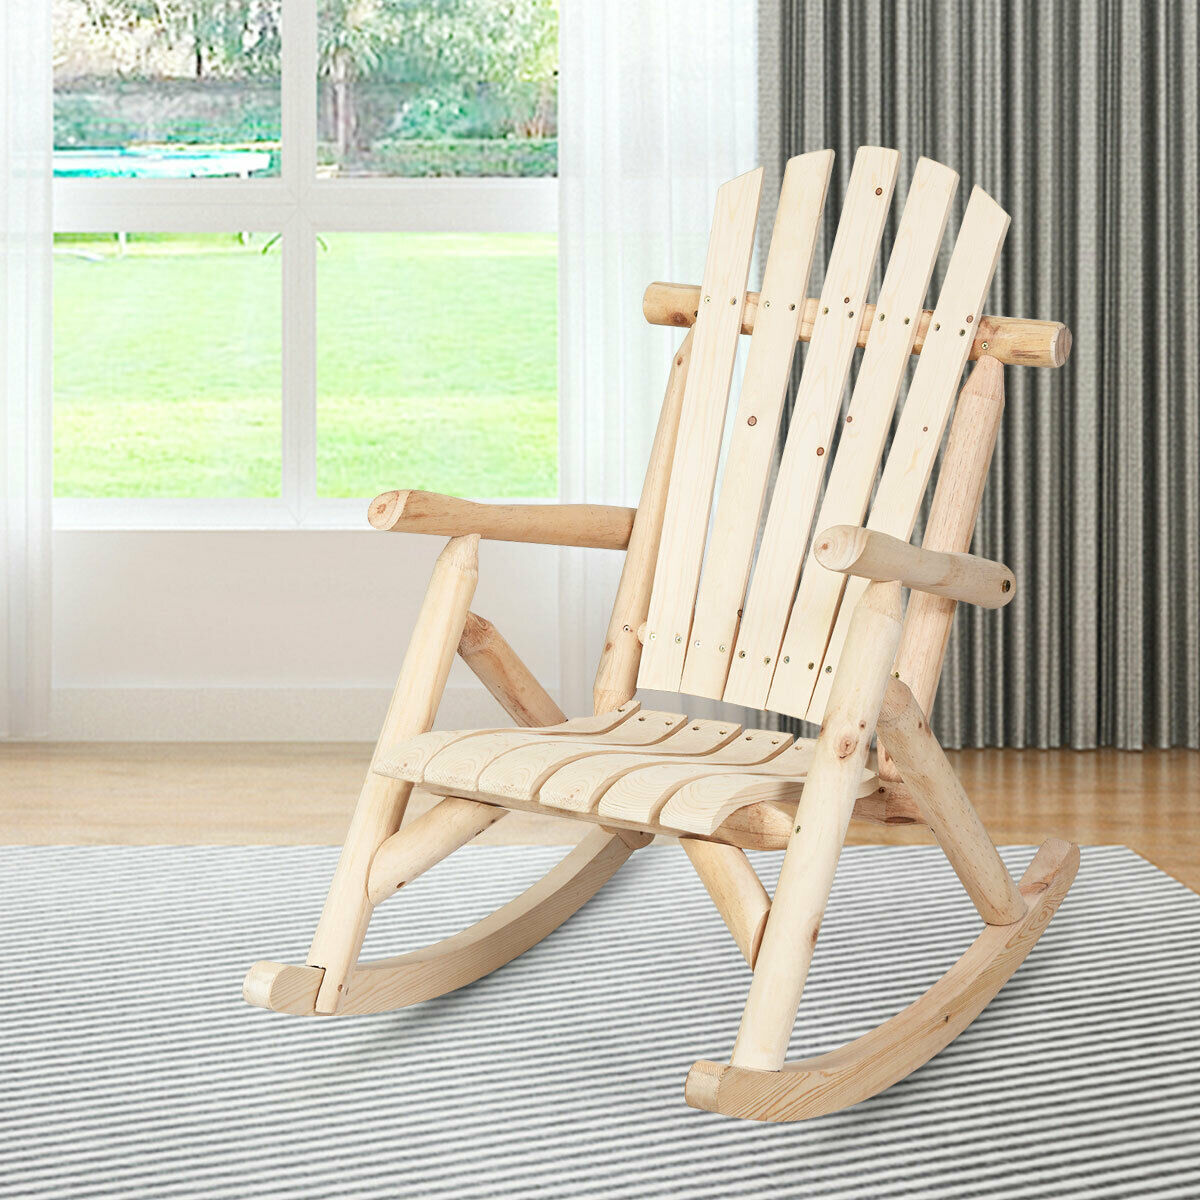 Costway Log Rocking Chair Wood Single Porch Rocker Lounge Patio Deck Furniture Natural - image 4 of 10